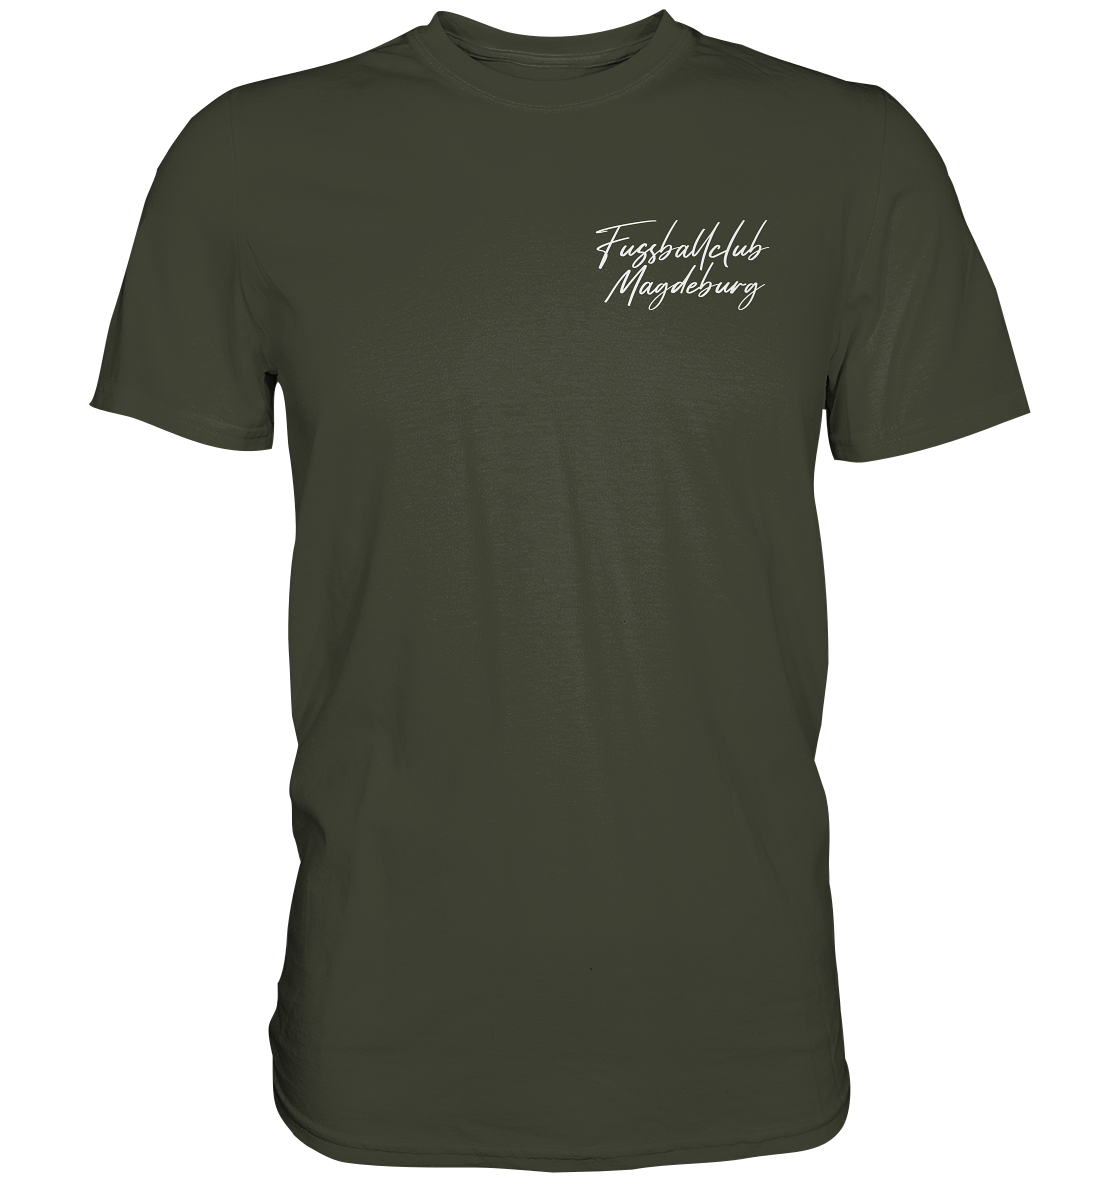 Fussballclub - Premium Shirt